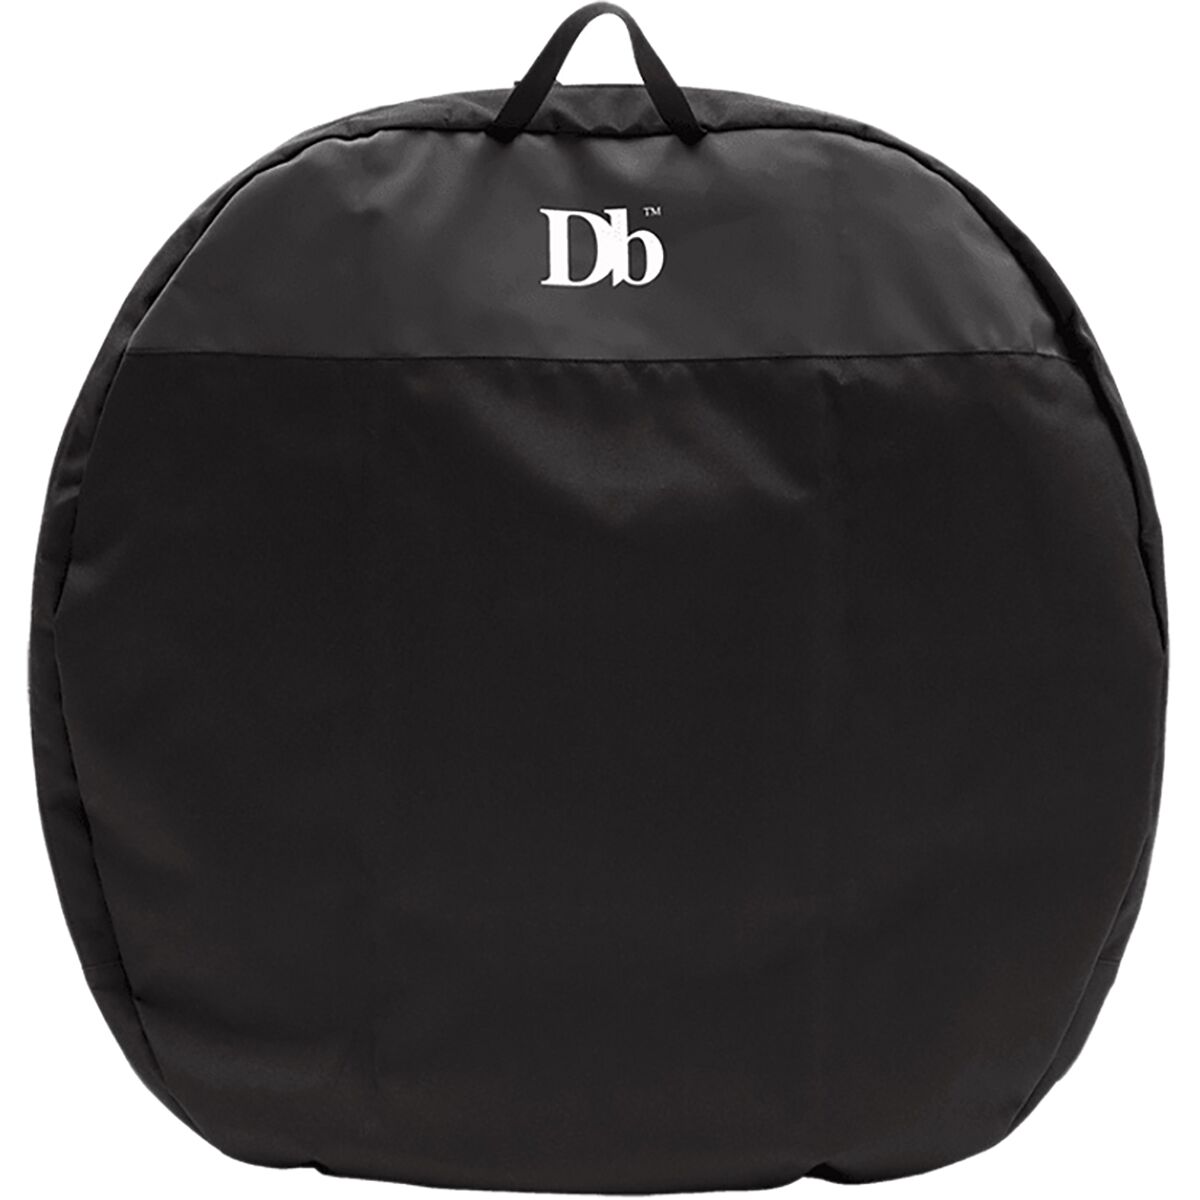 Db The Vaxla Wheel Bag